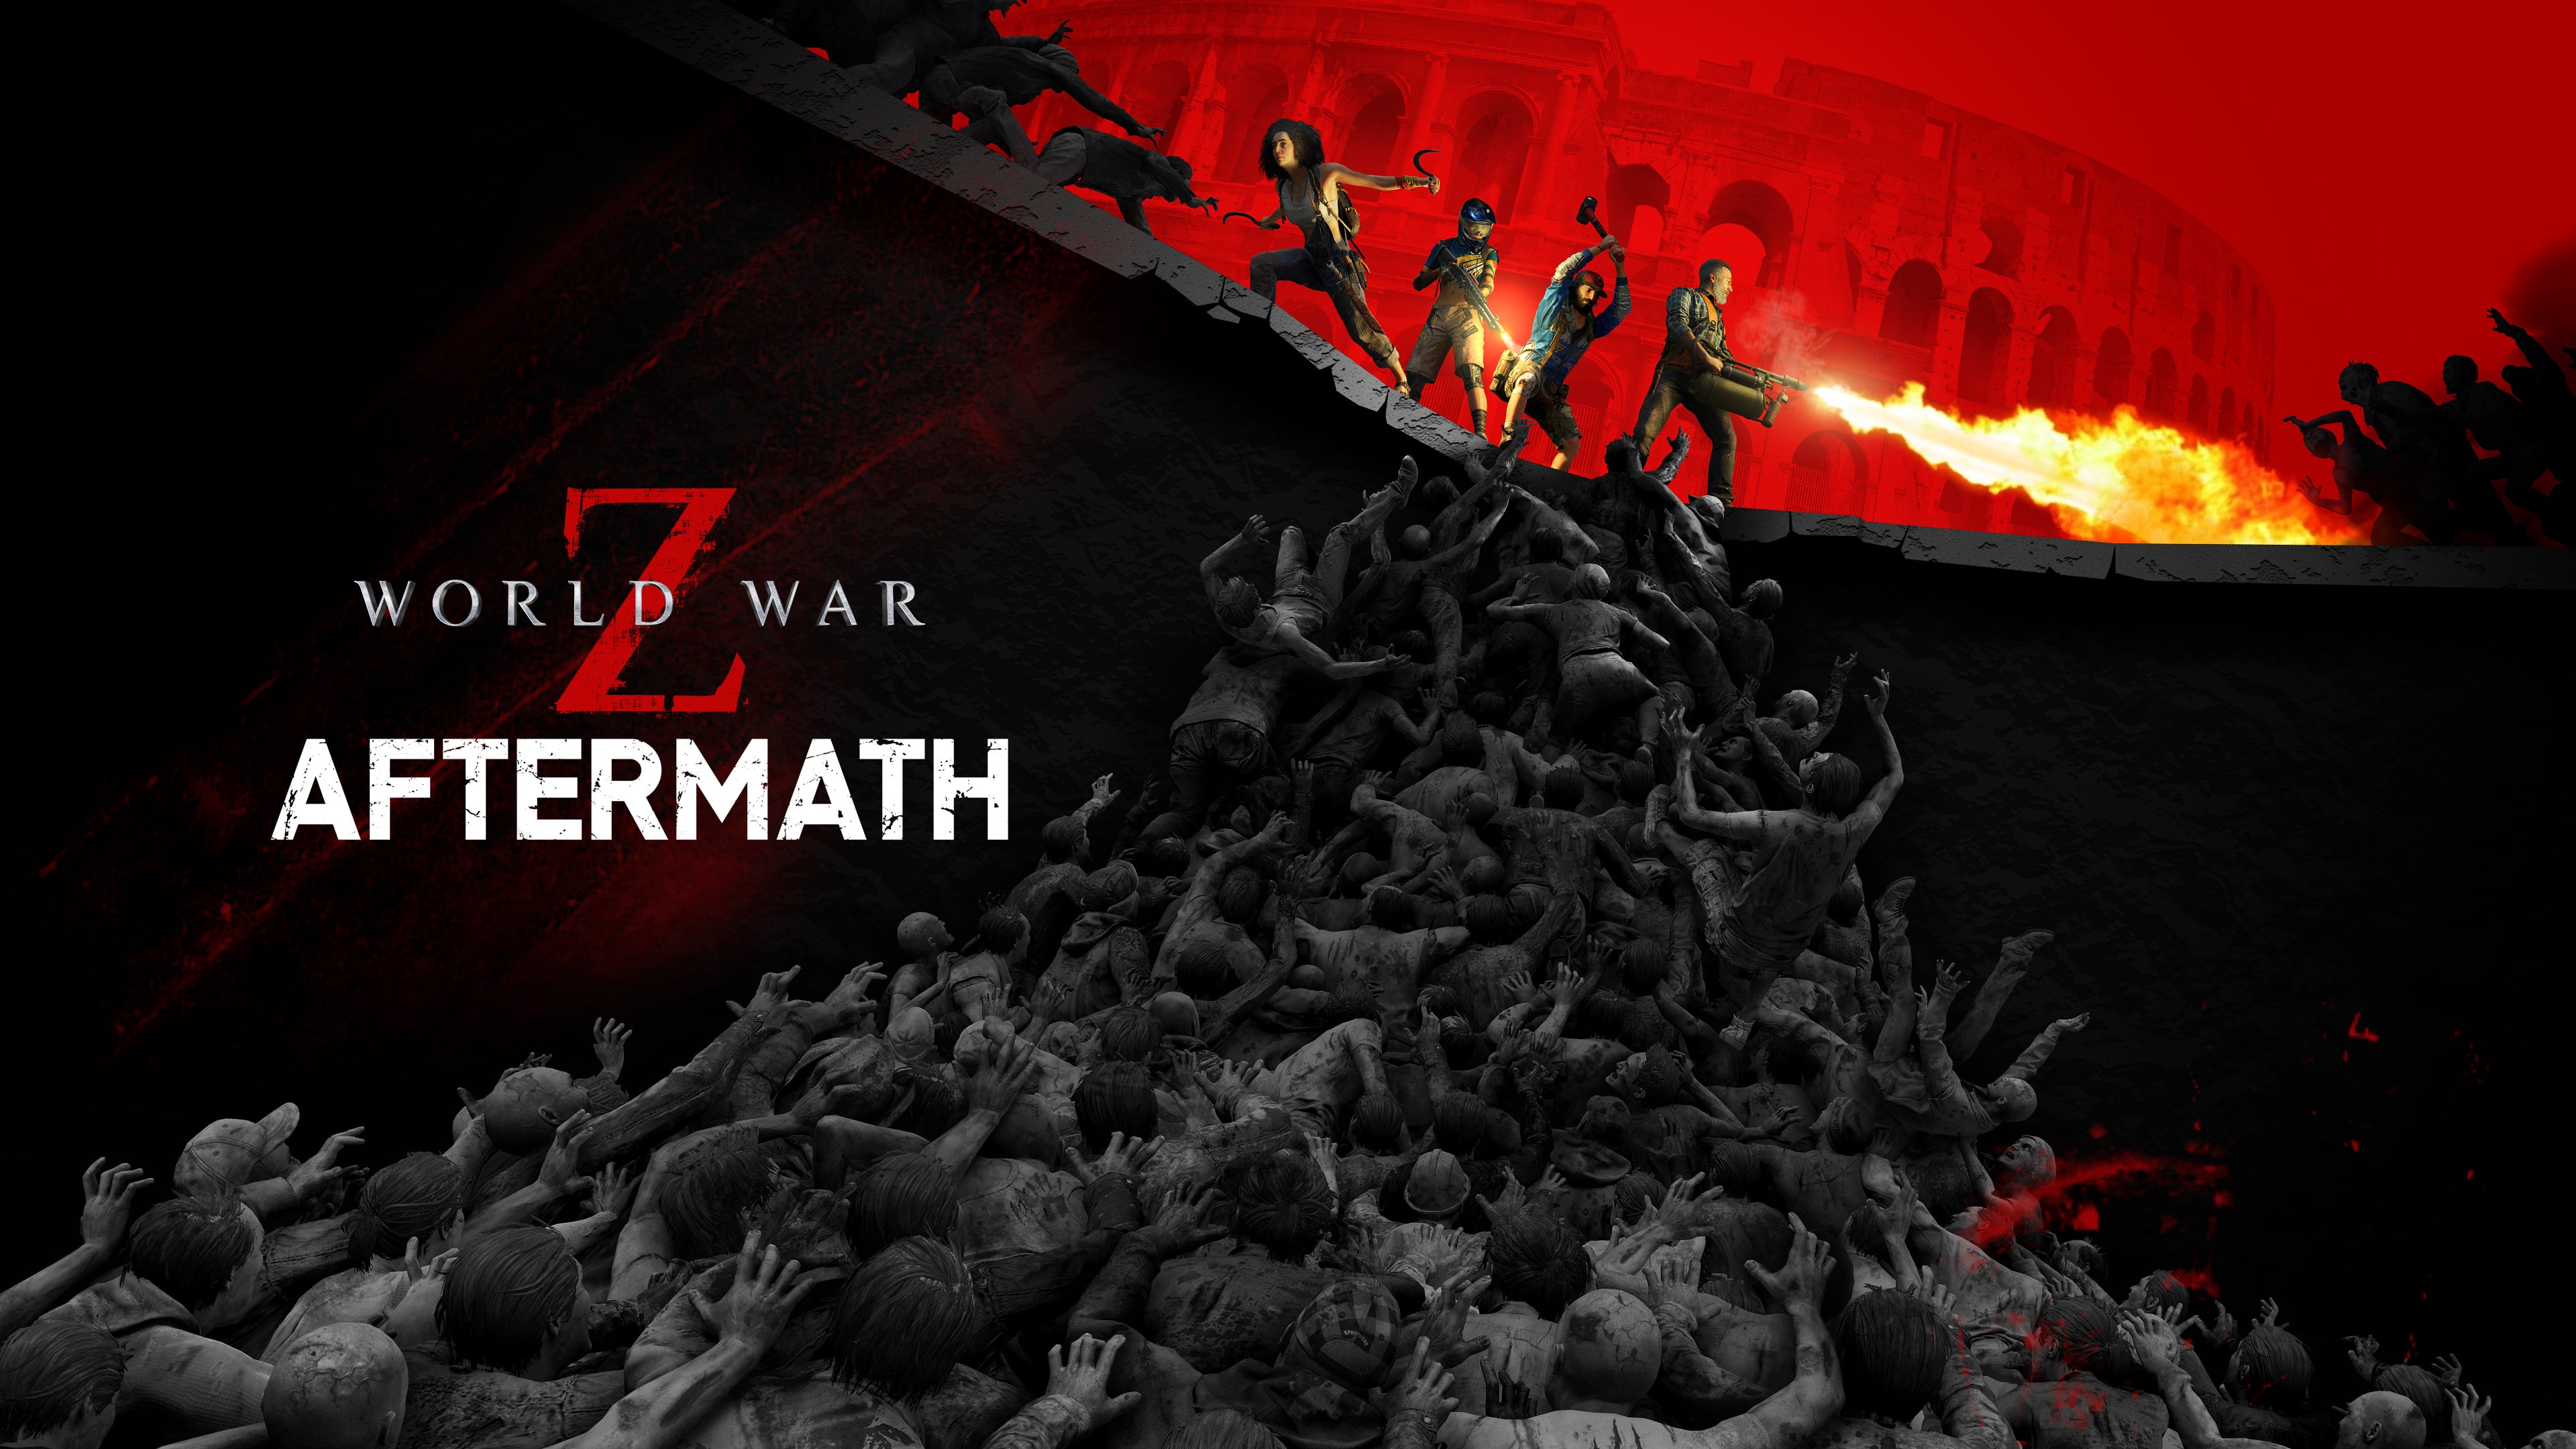 World War Z: Aftermath (簡體中文, 韓文, 英文, 繁體中文)